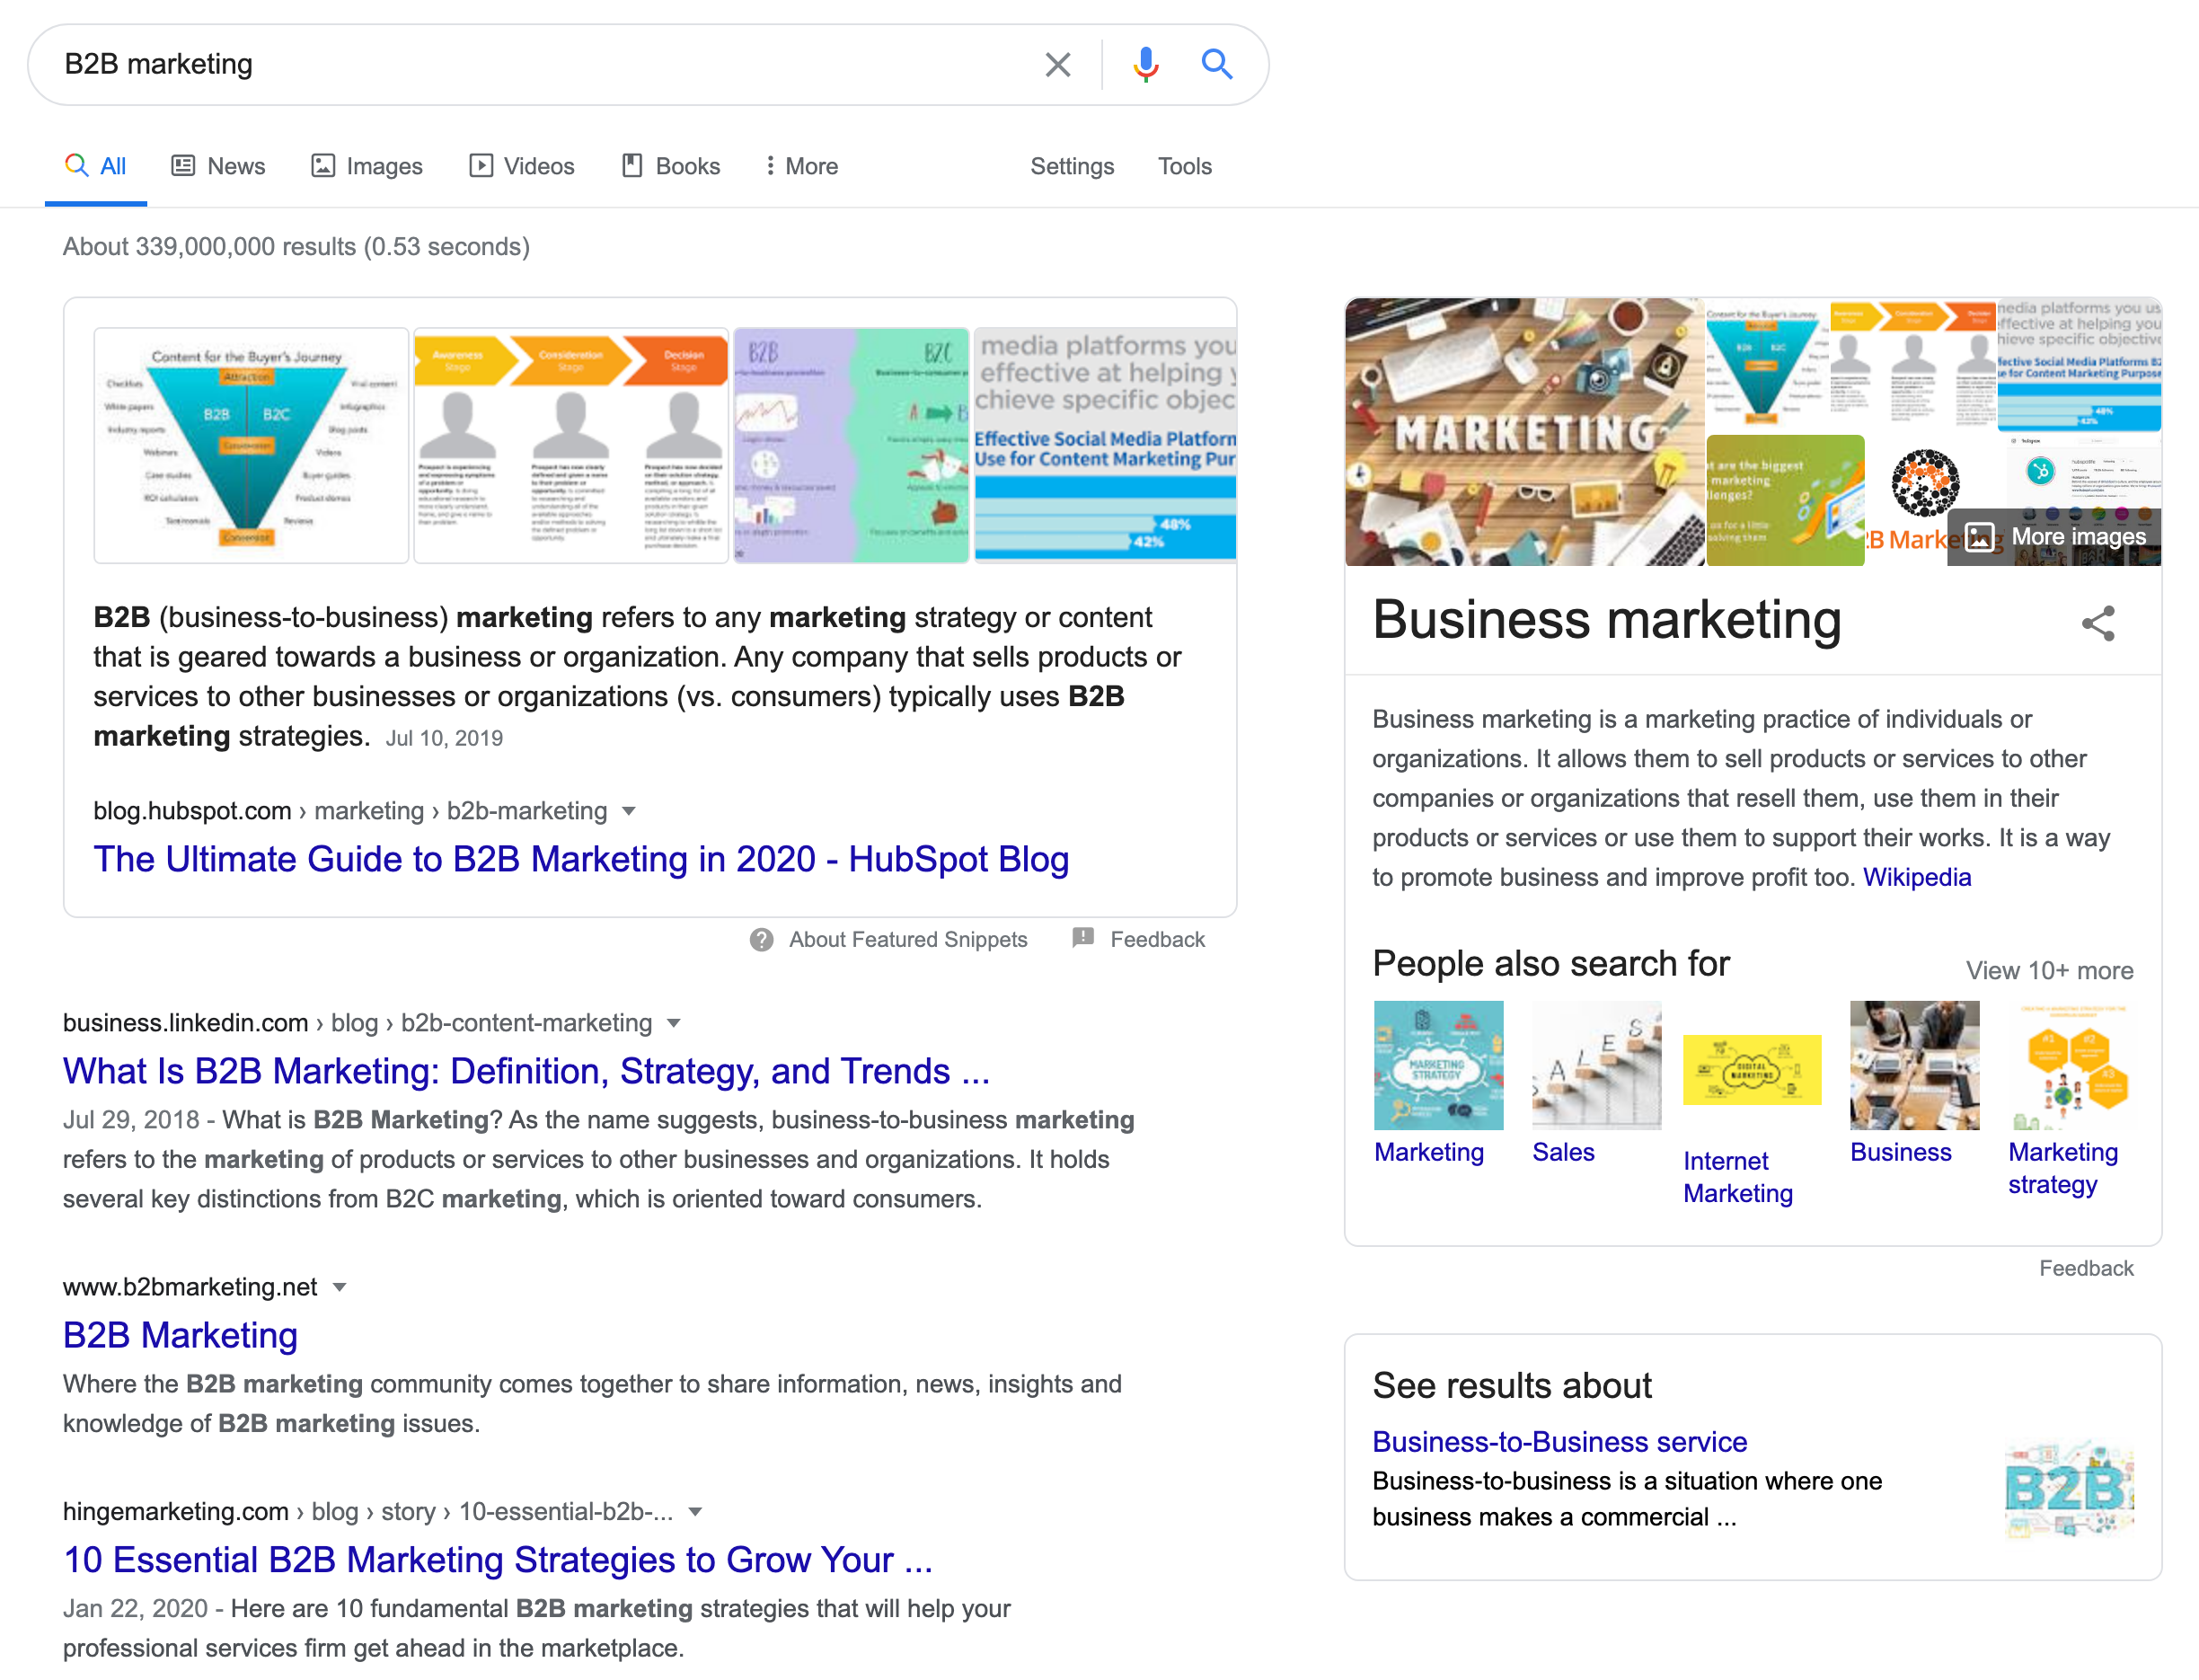 B2B Marketing search querey in Google